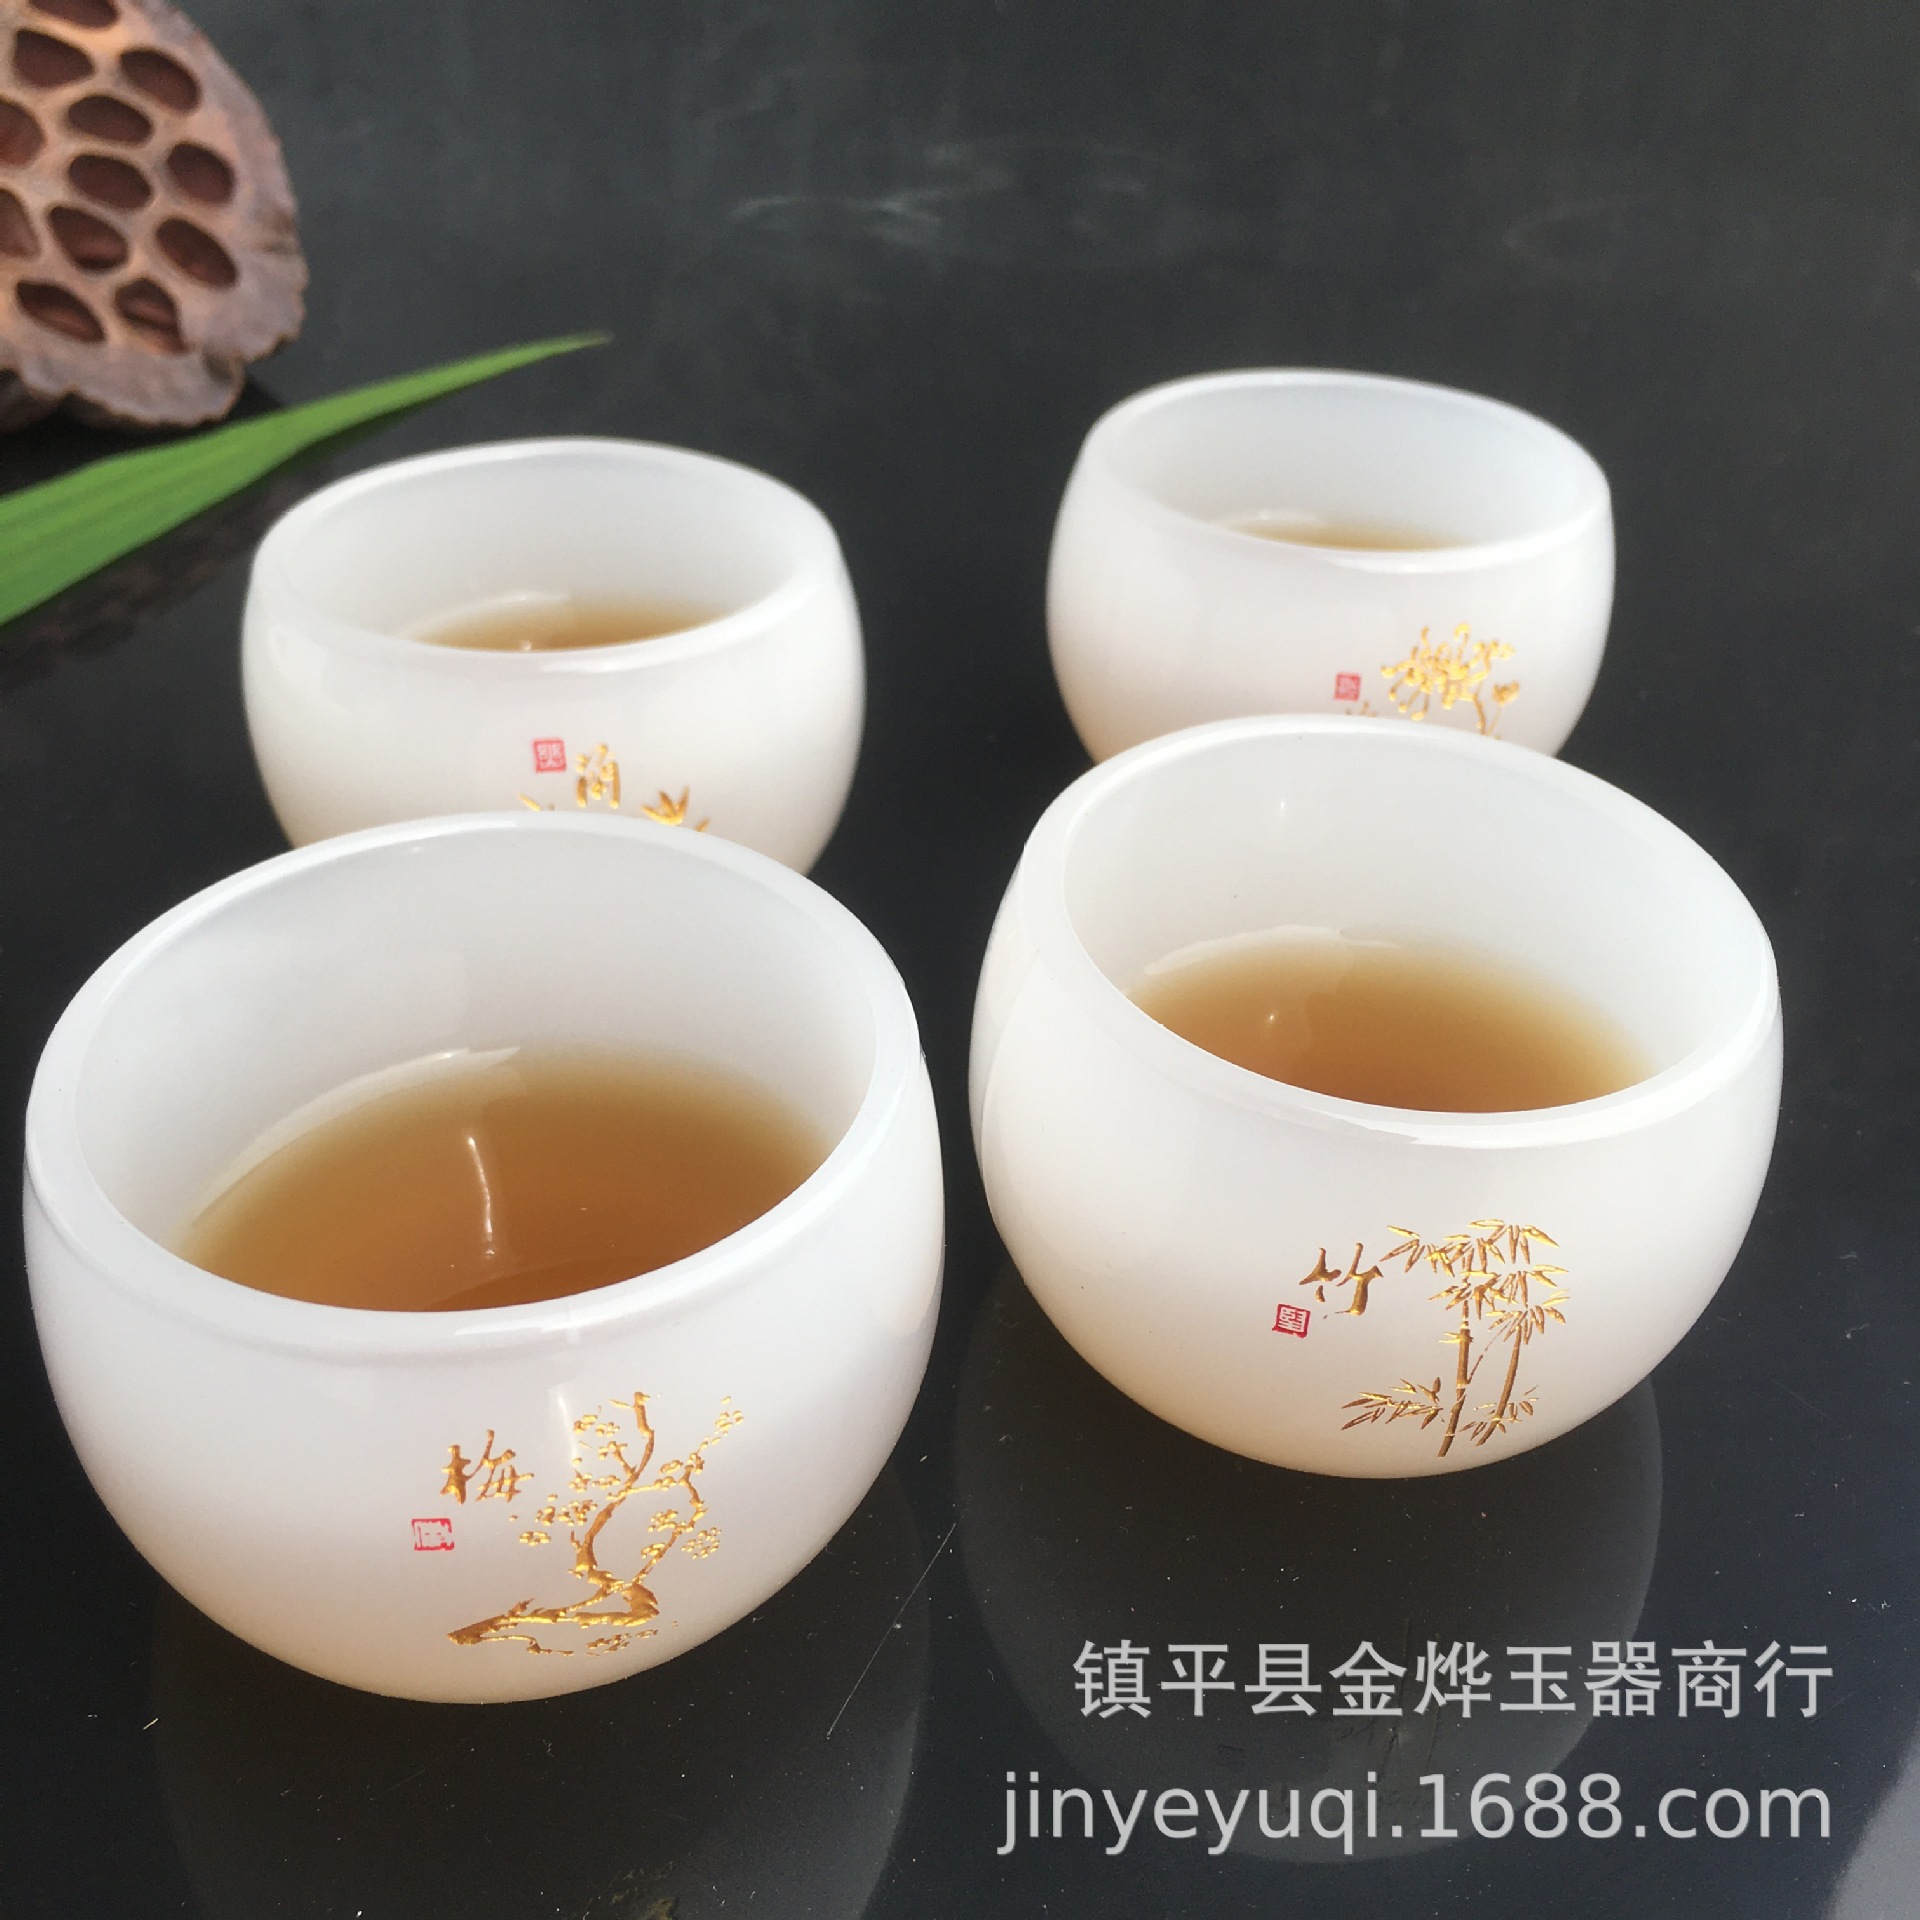 Jade porcelain Glass Cup Four gentlemen Merlin, bamboo and chrysanthemum master Kungfu Online tea set suit Tea cup Priced supply